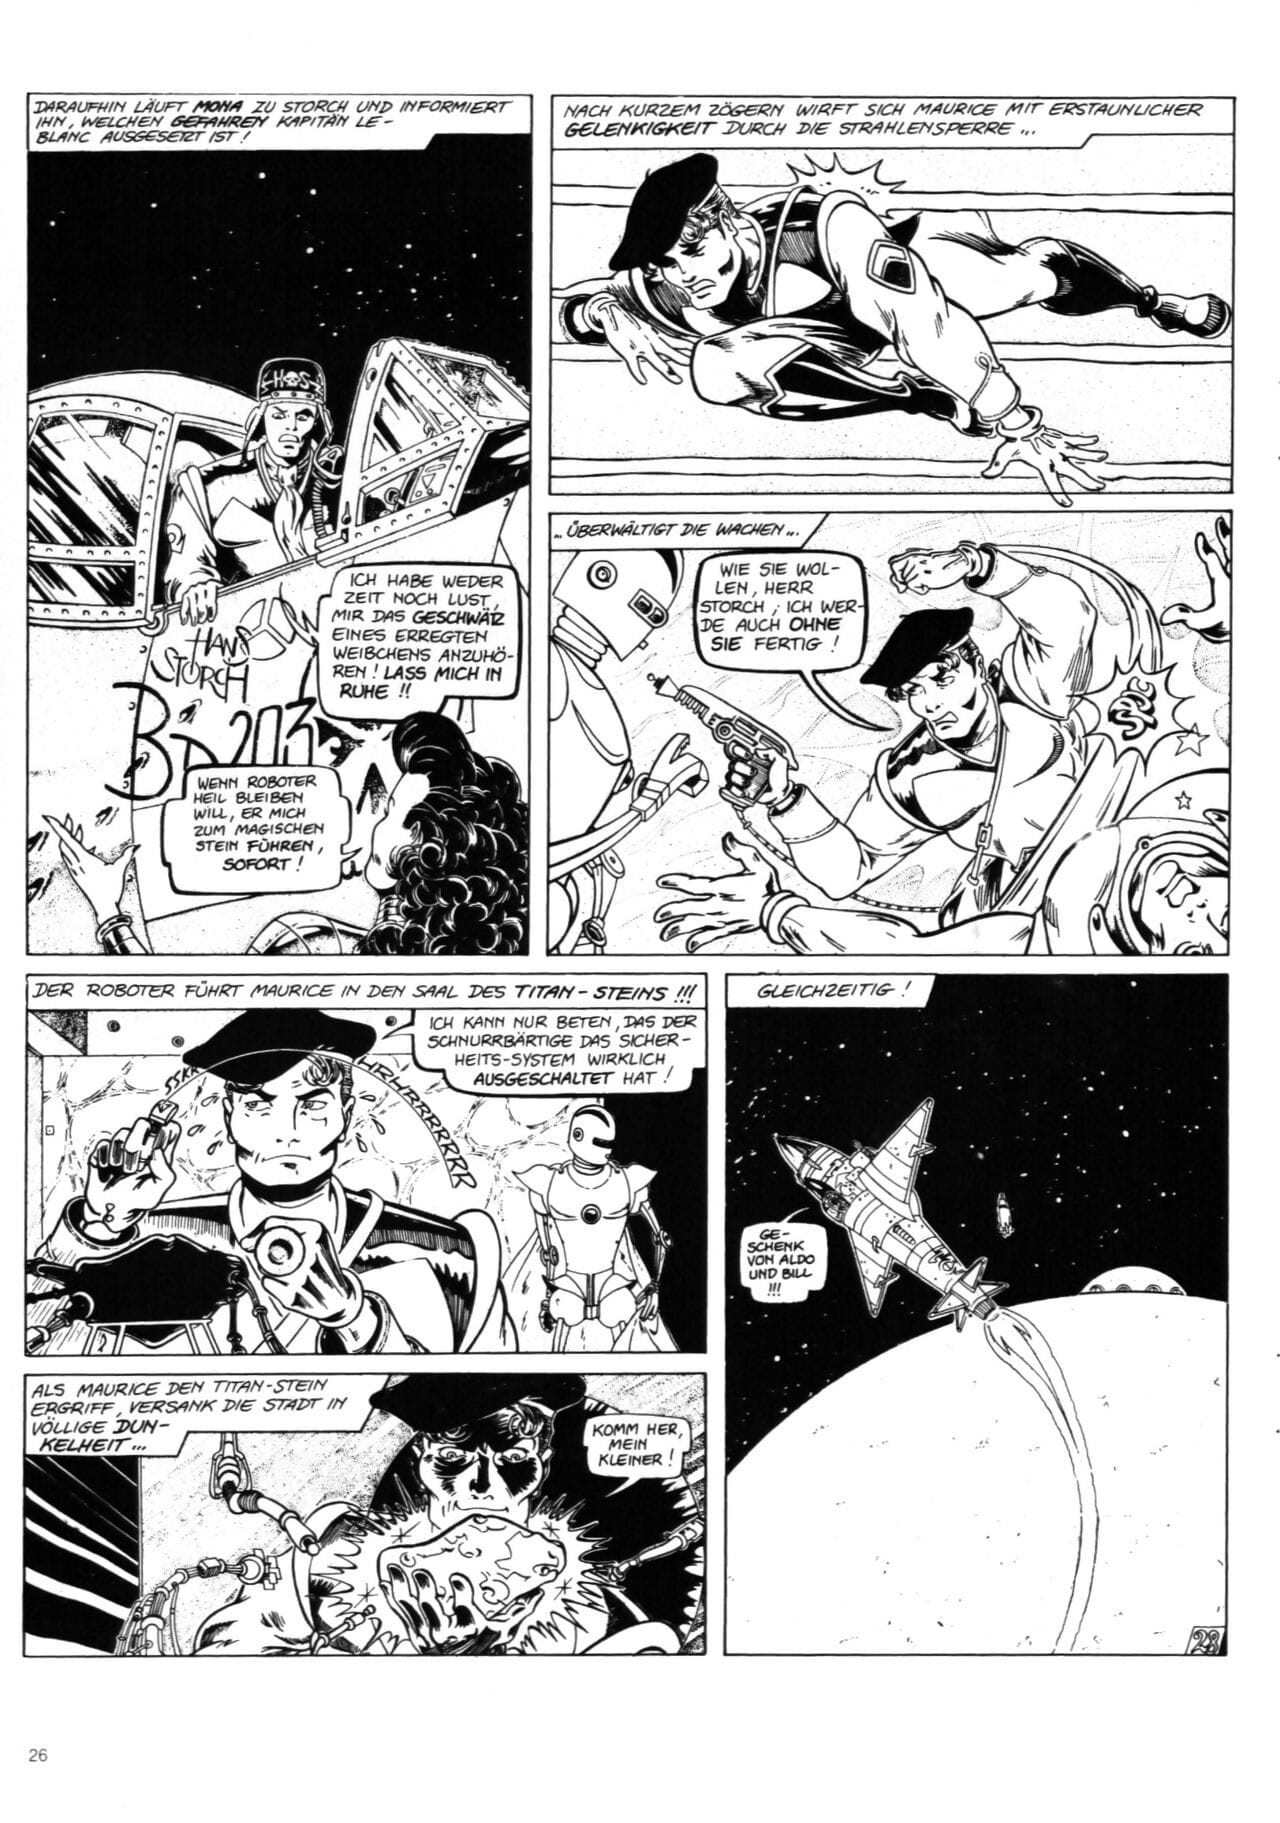 schwermetall #030 parte 2 page 1